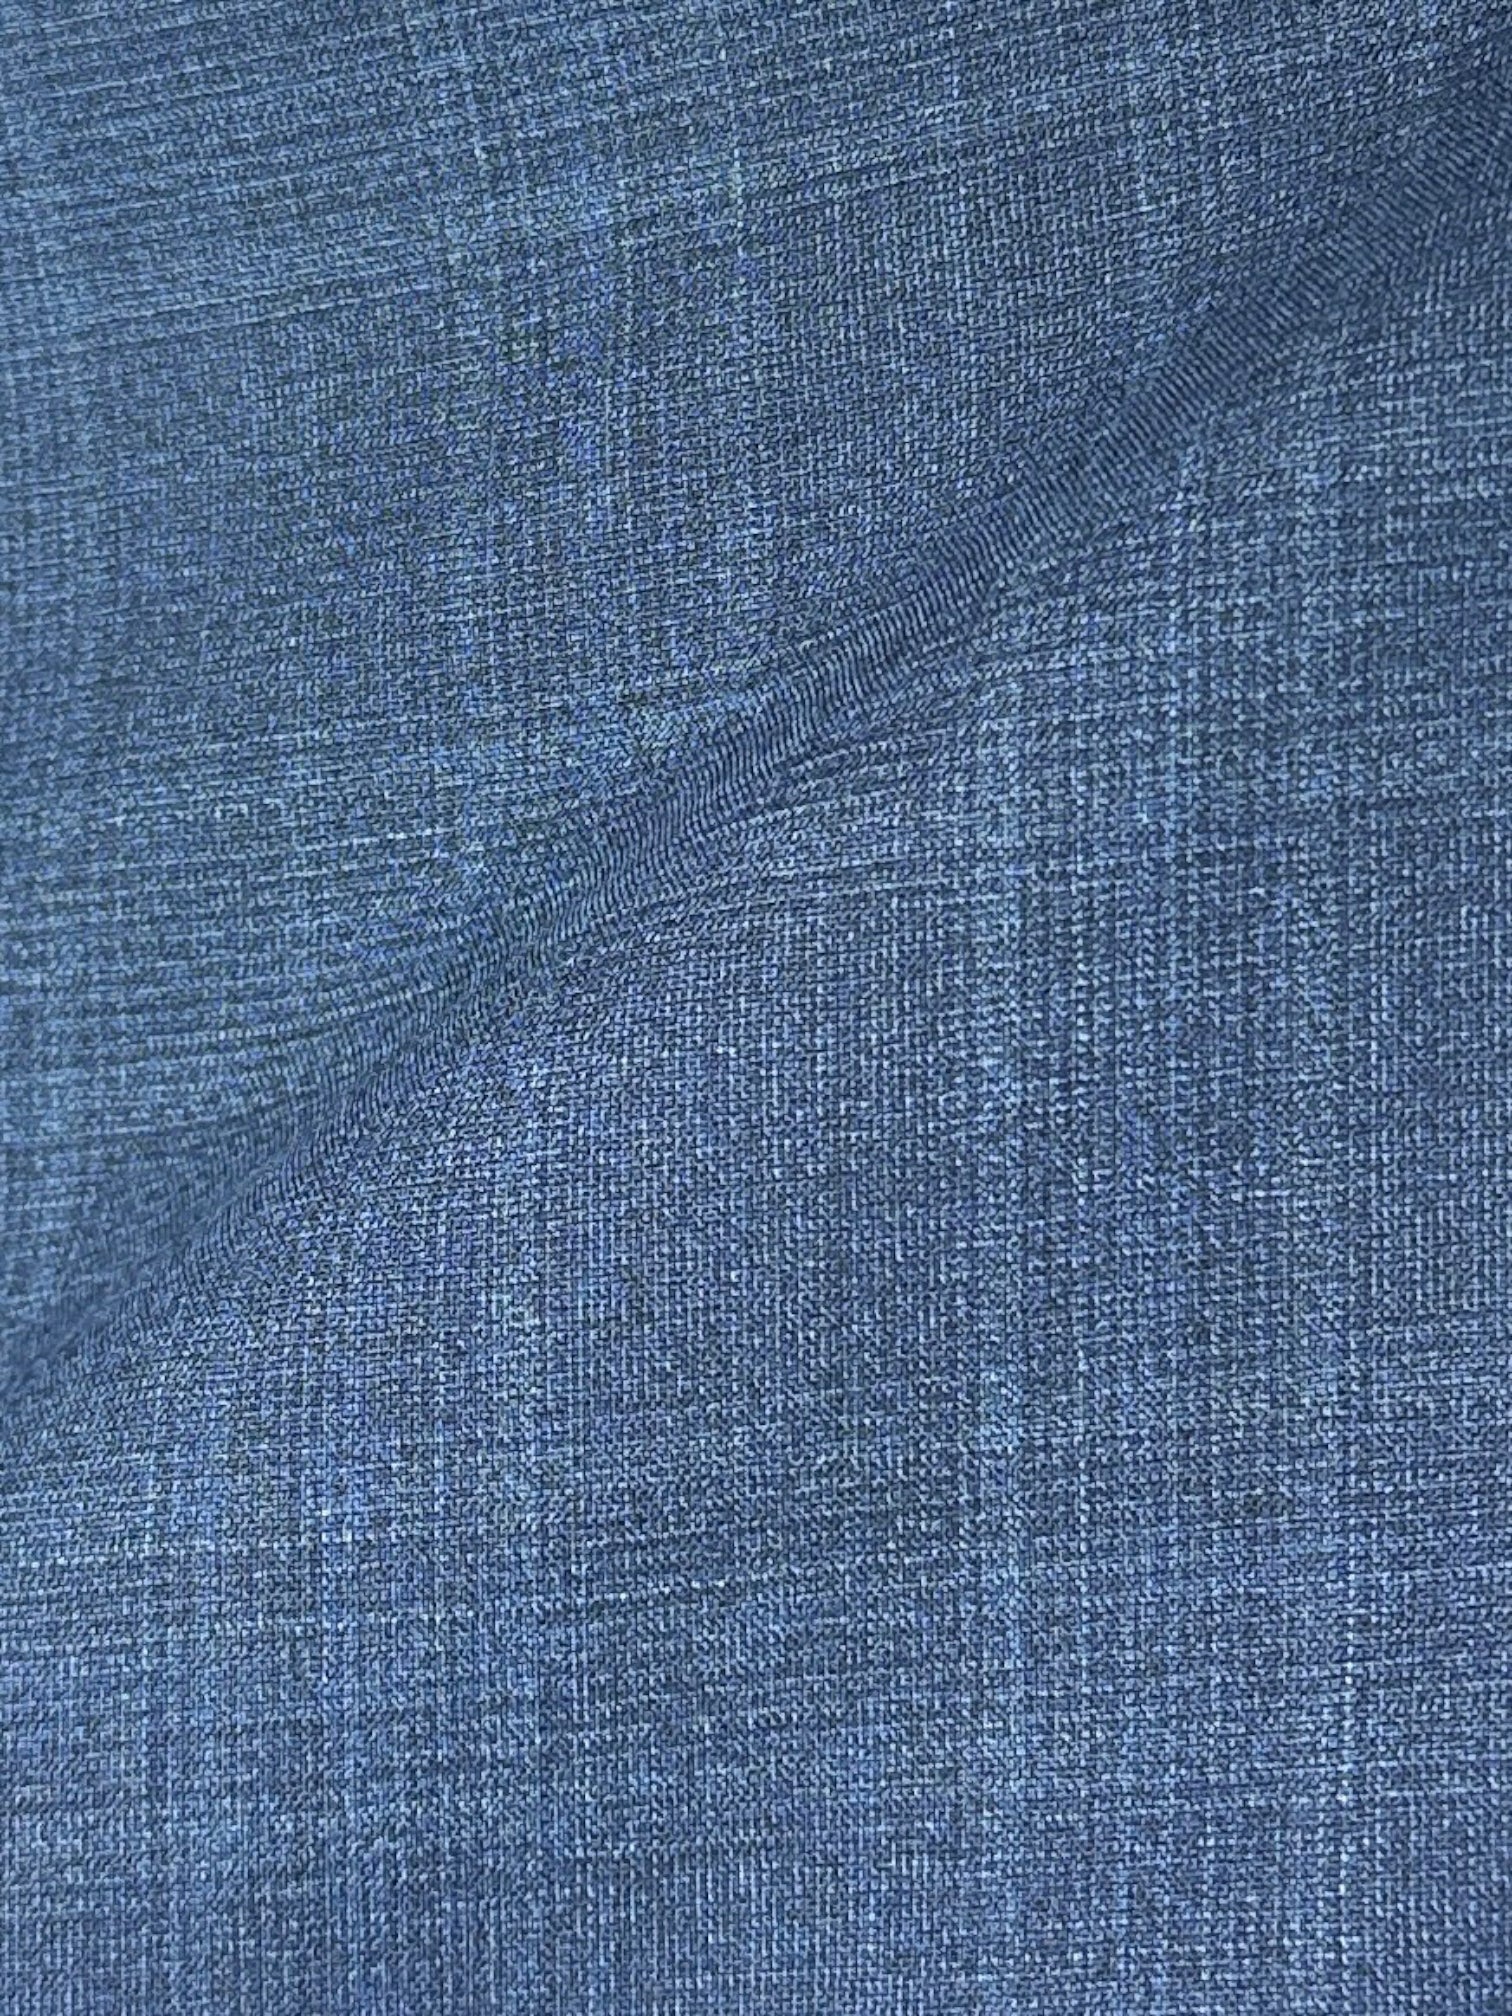 Cesare Attolini Blue Glenplaid Super 150's Suit